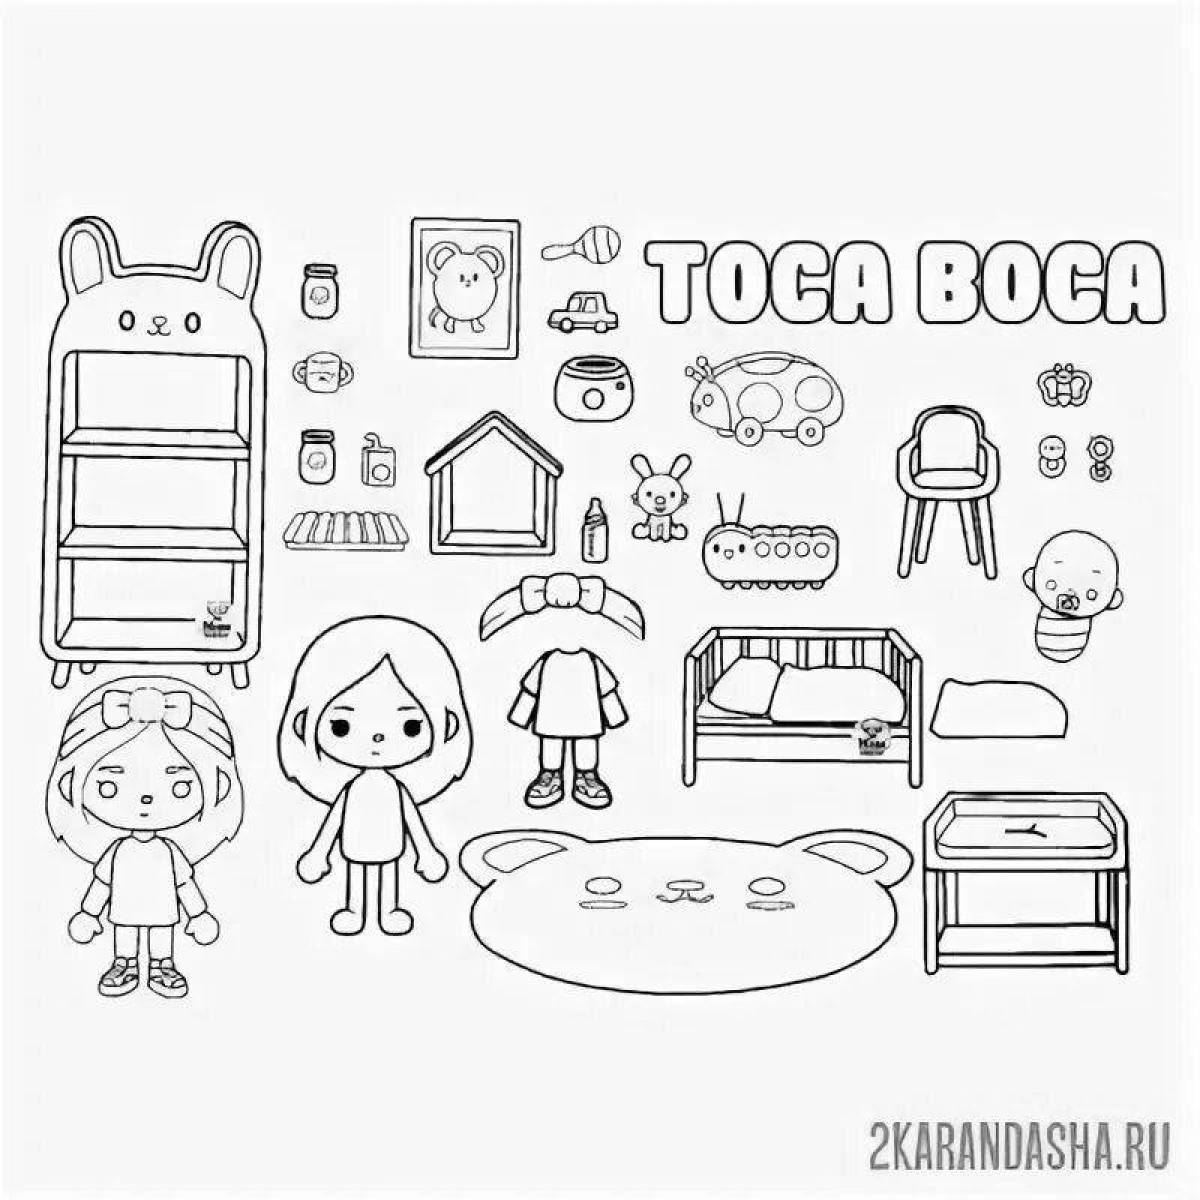 Energetic furniture toka boca